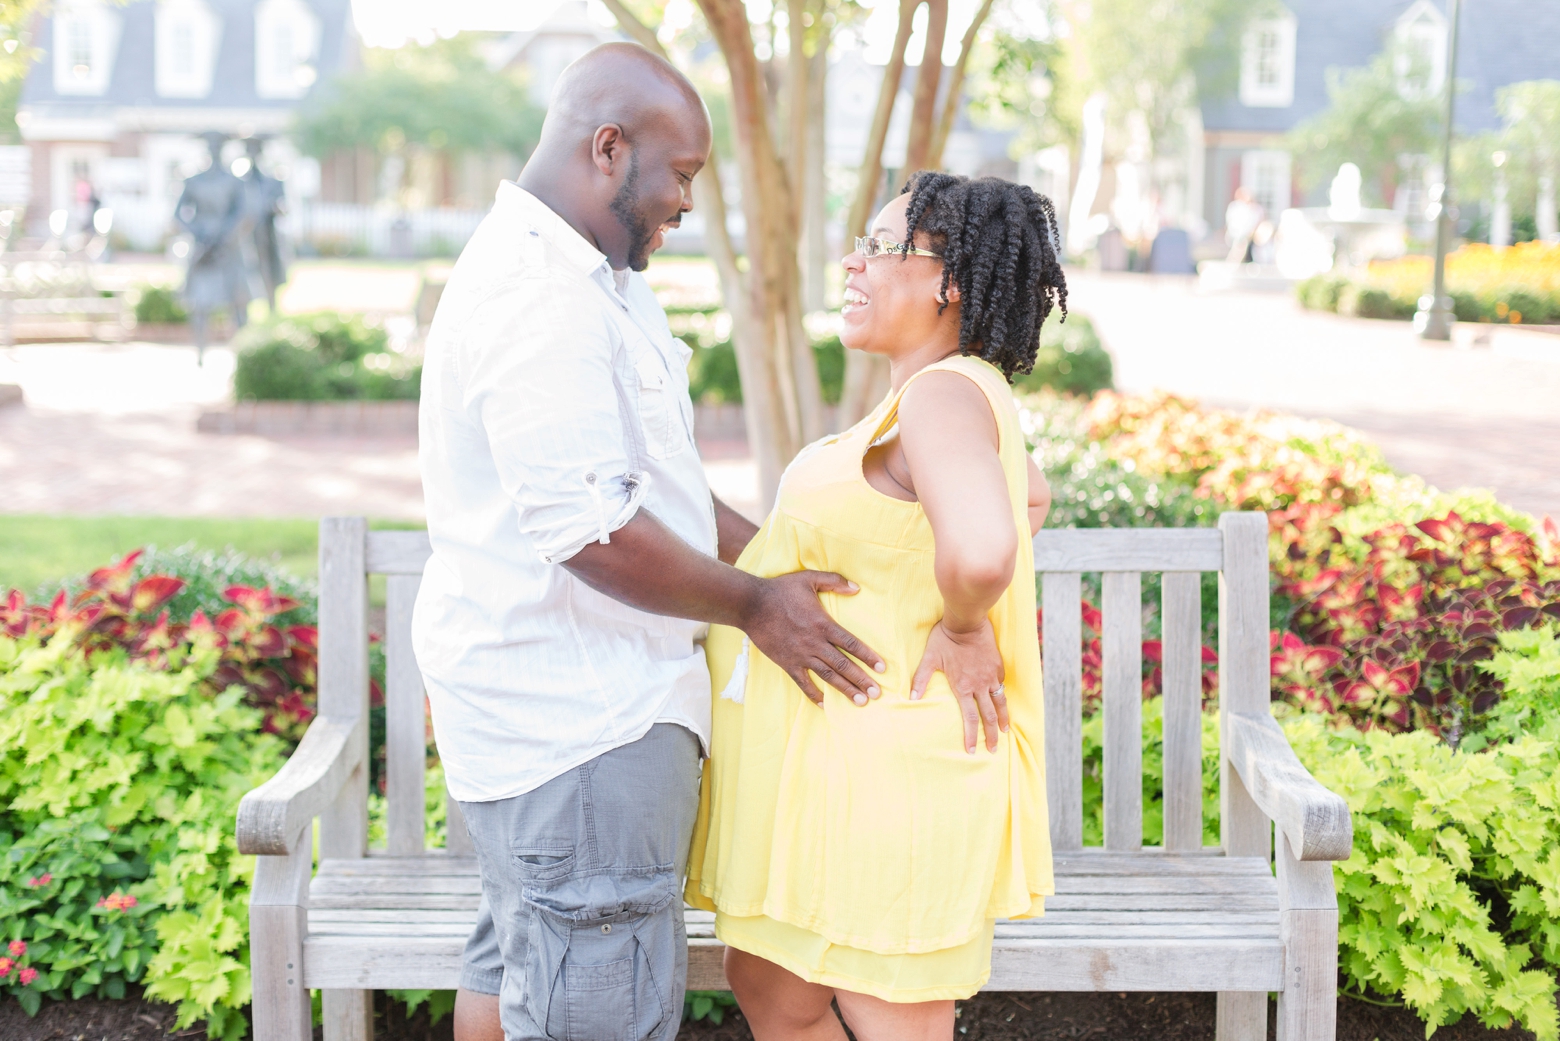 Hampton Roads Maternity Photography